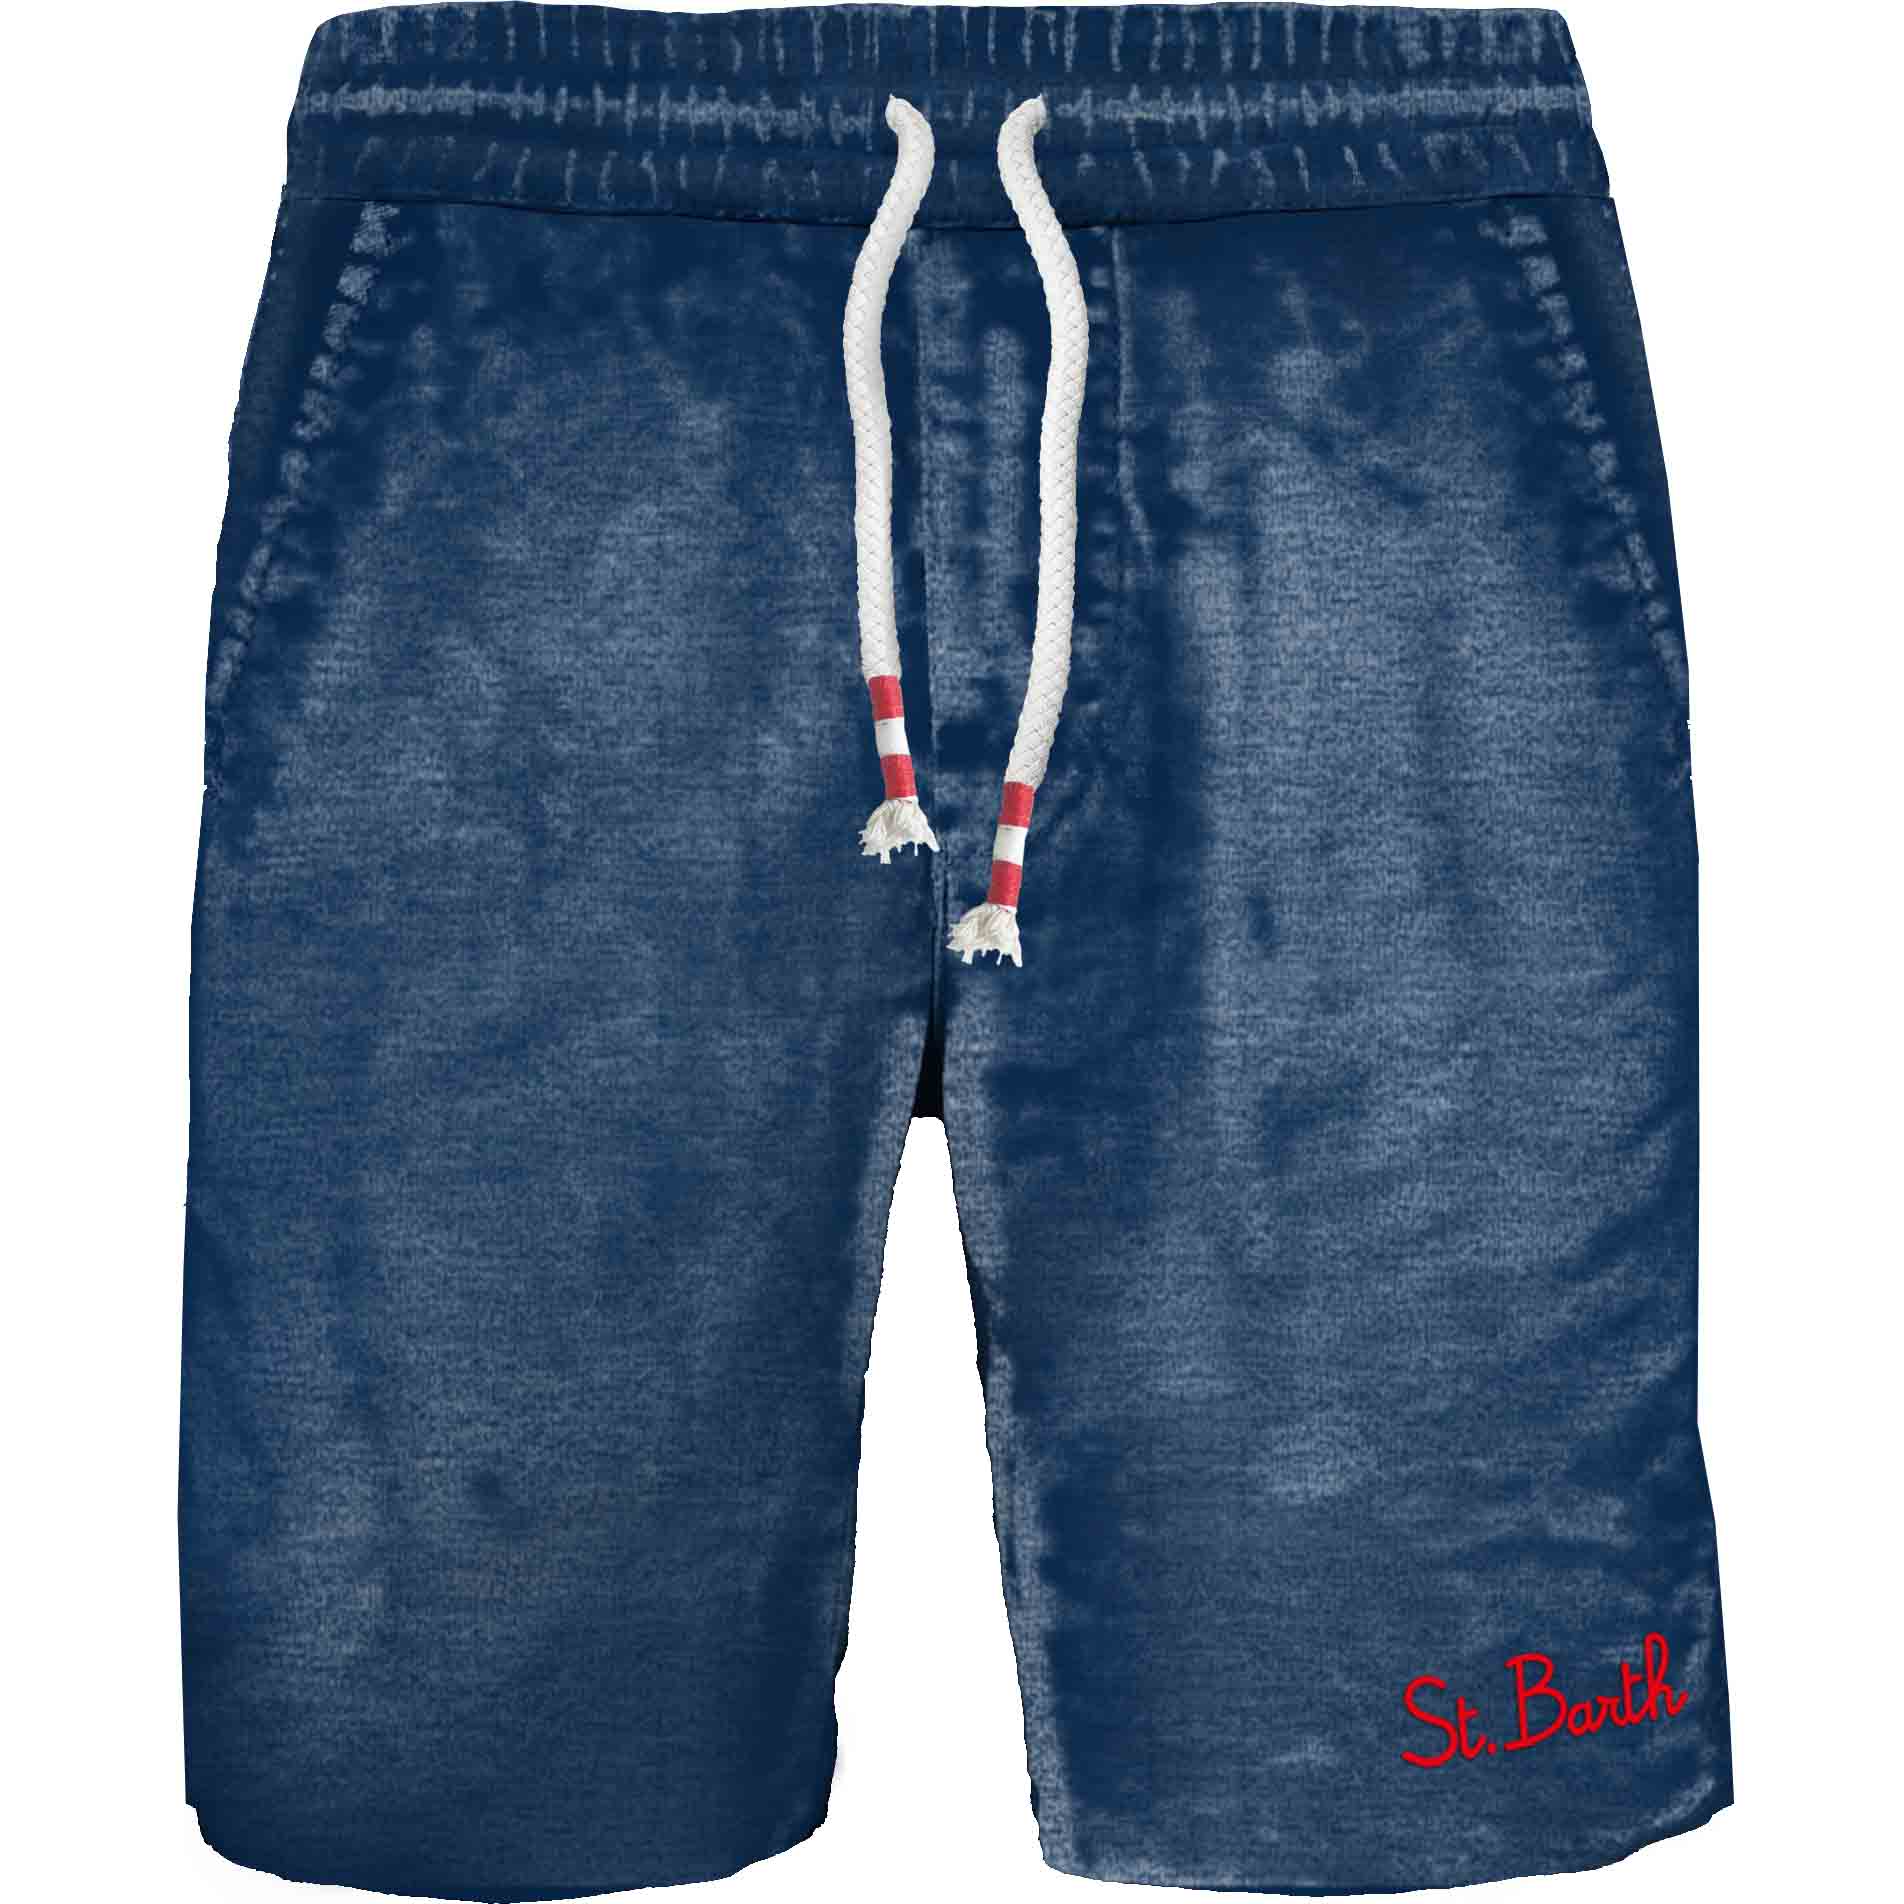 Pantaloncino in Tuta / Blu - Ideal Moda